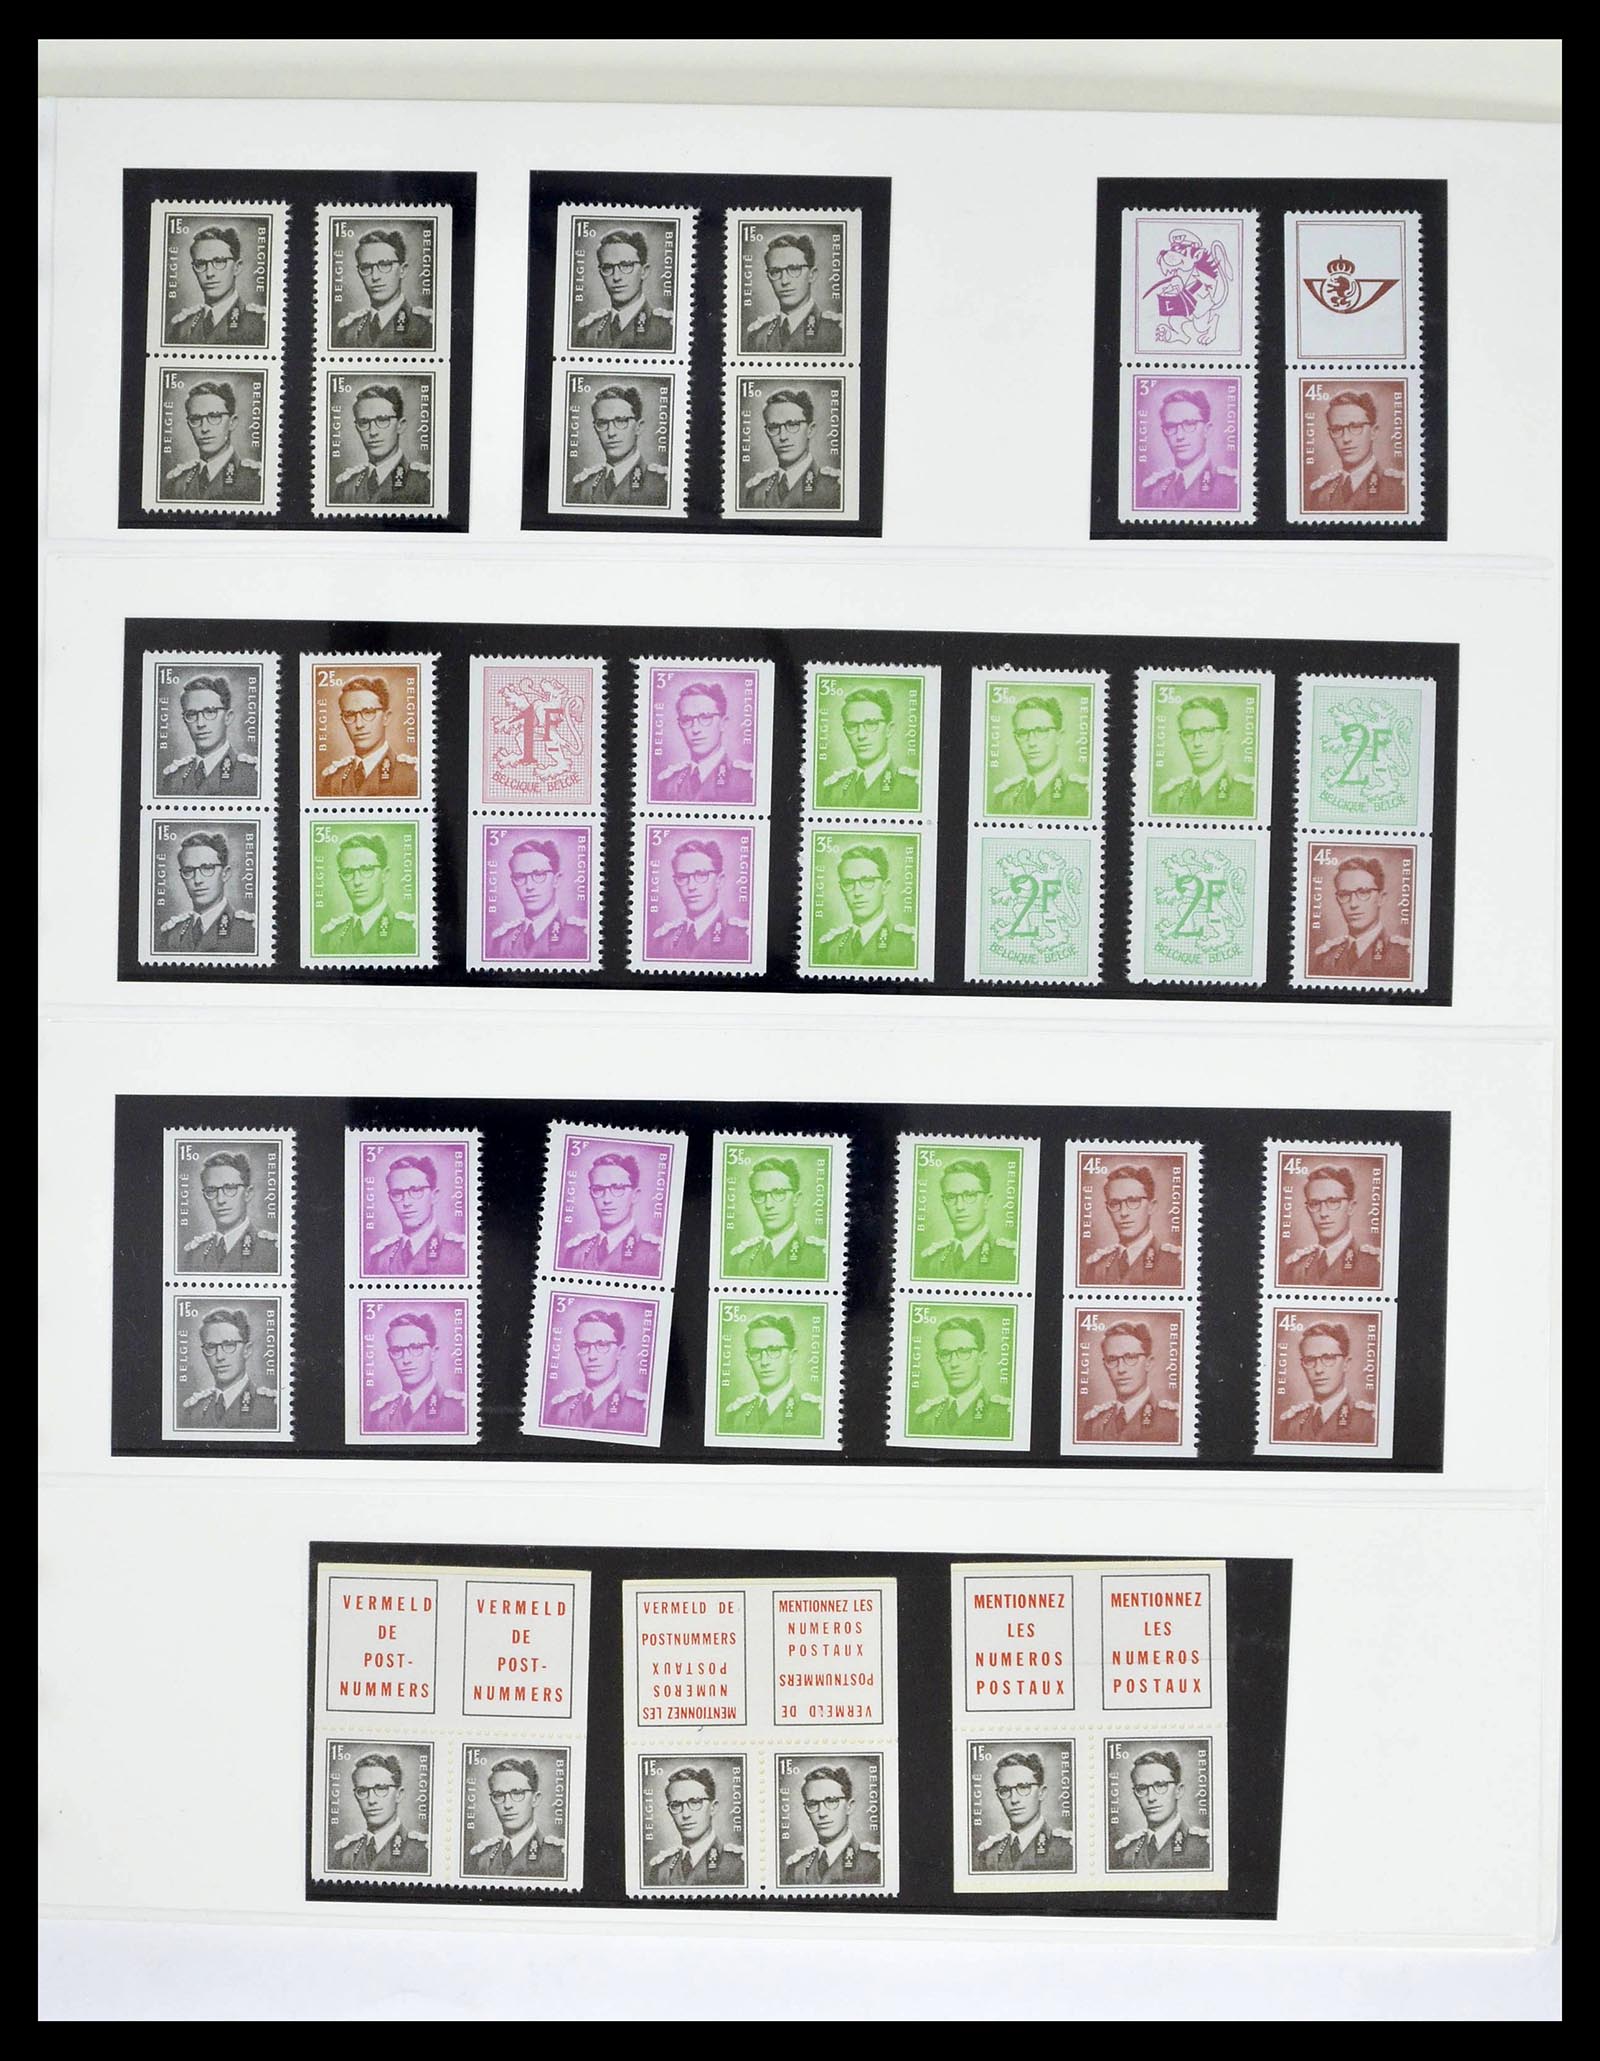 39229 0051 - Stamp collection 39229 Belgium Boudewijn with glasses 1952-1975.